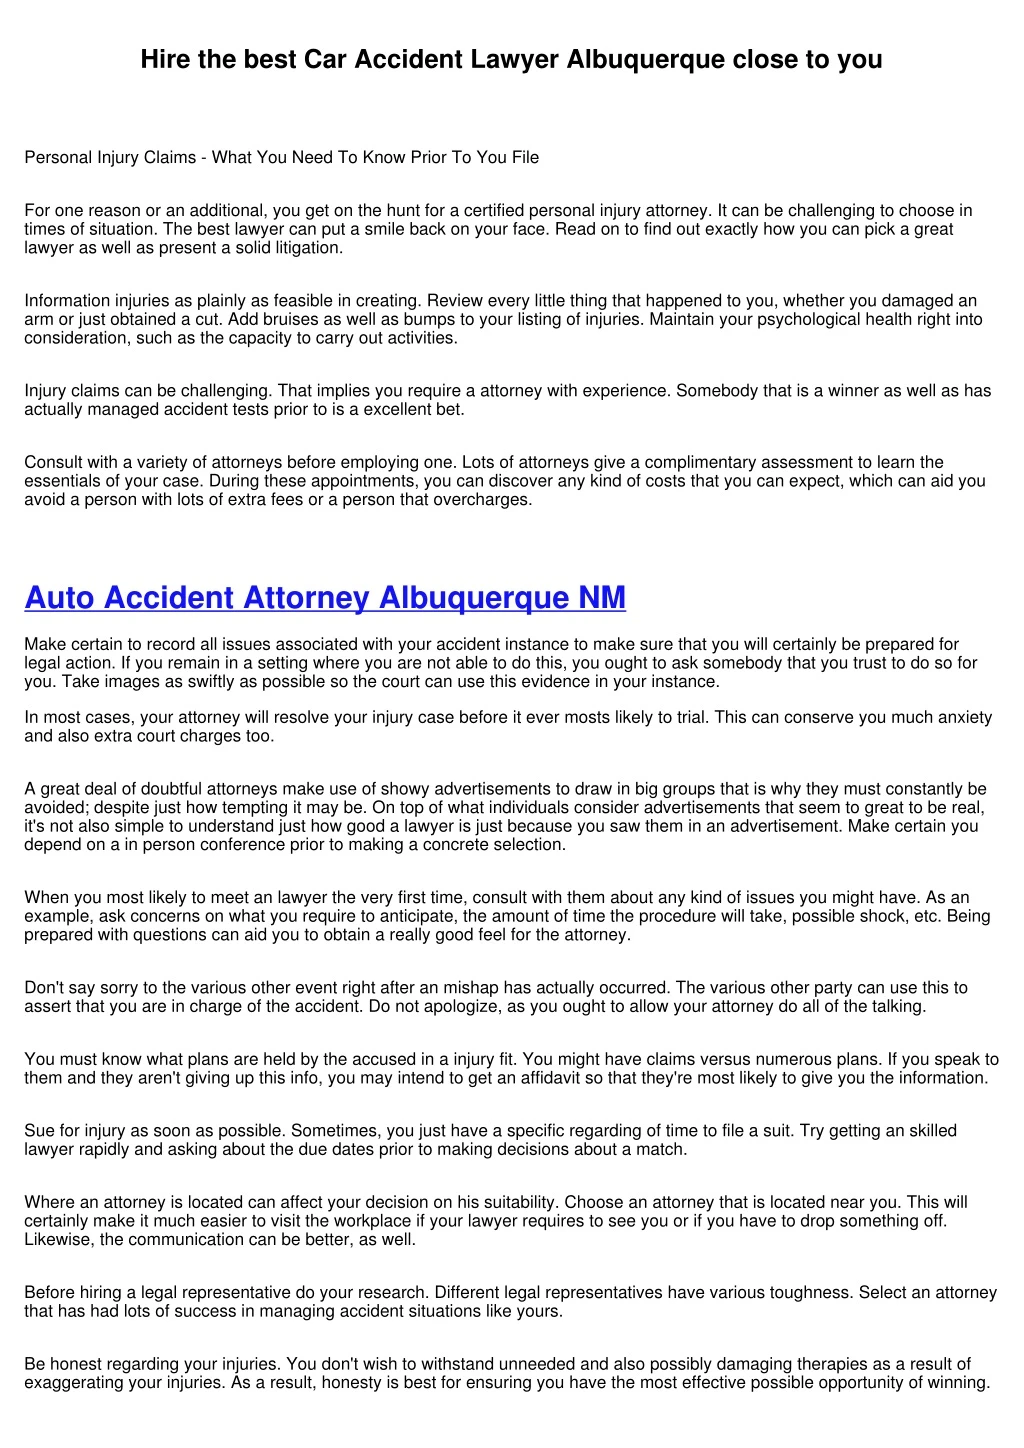 hire the best car accident lawyer albuquerque